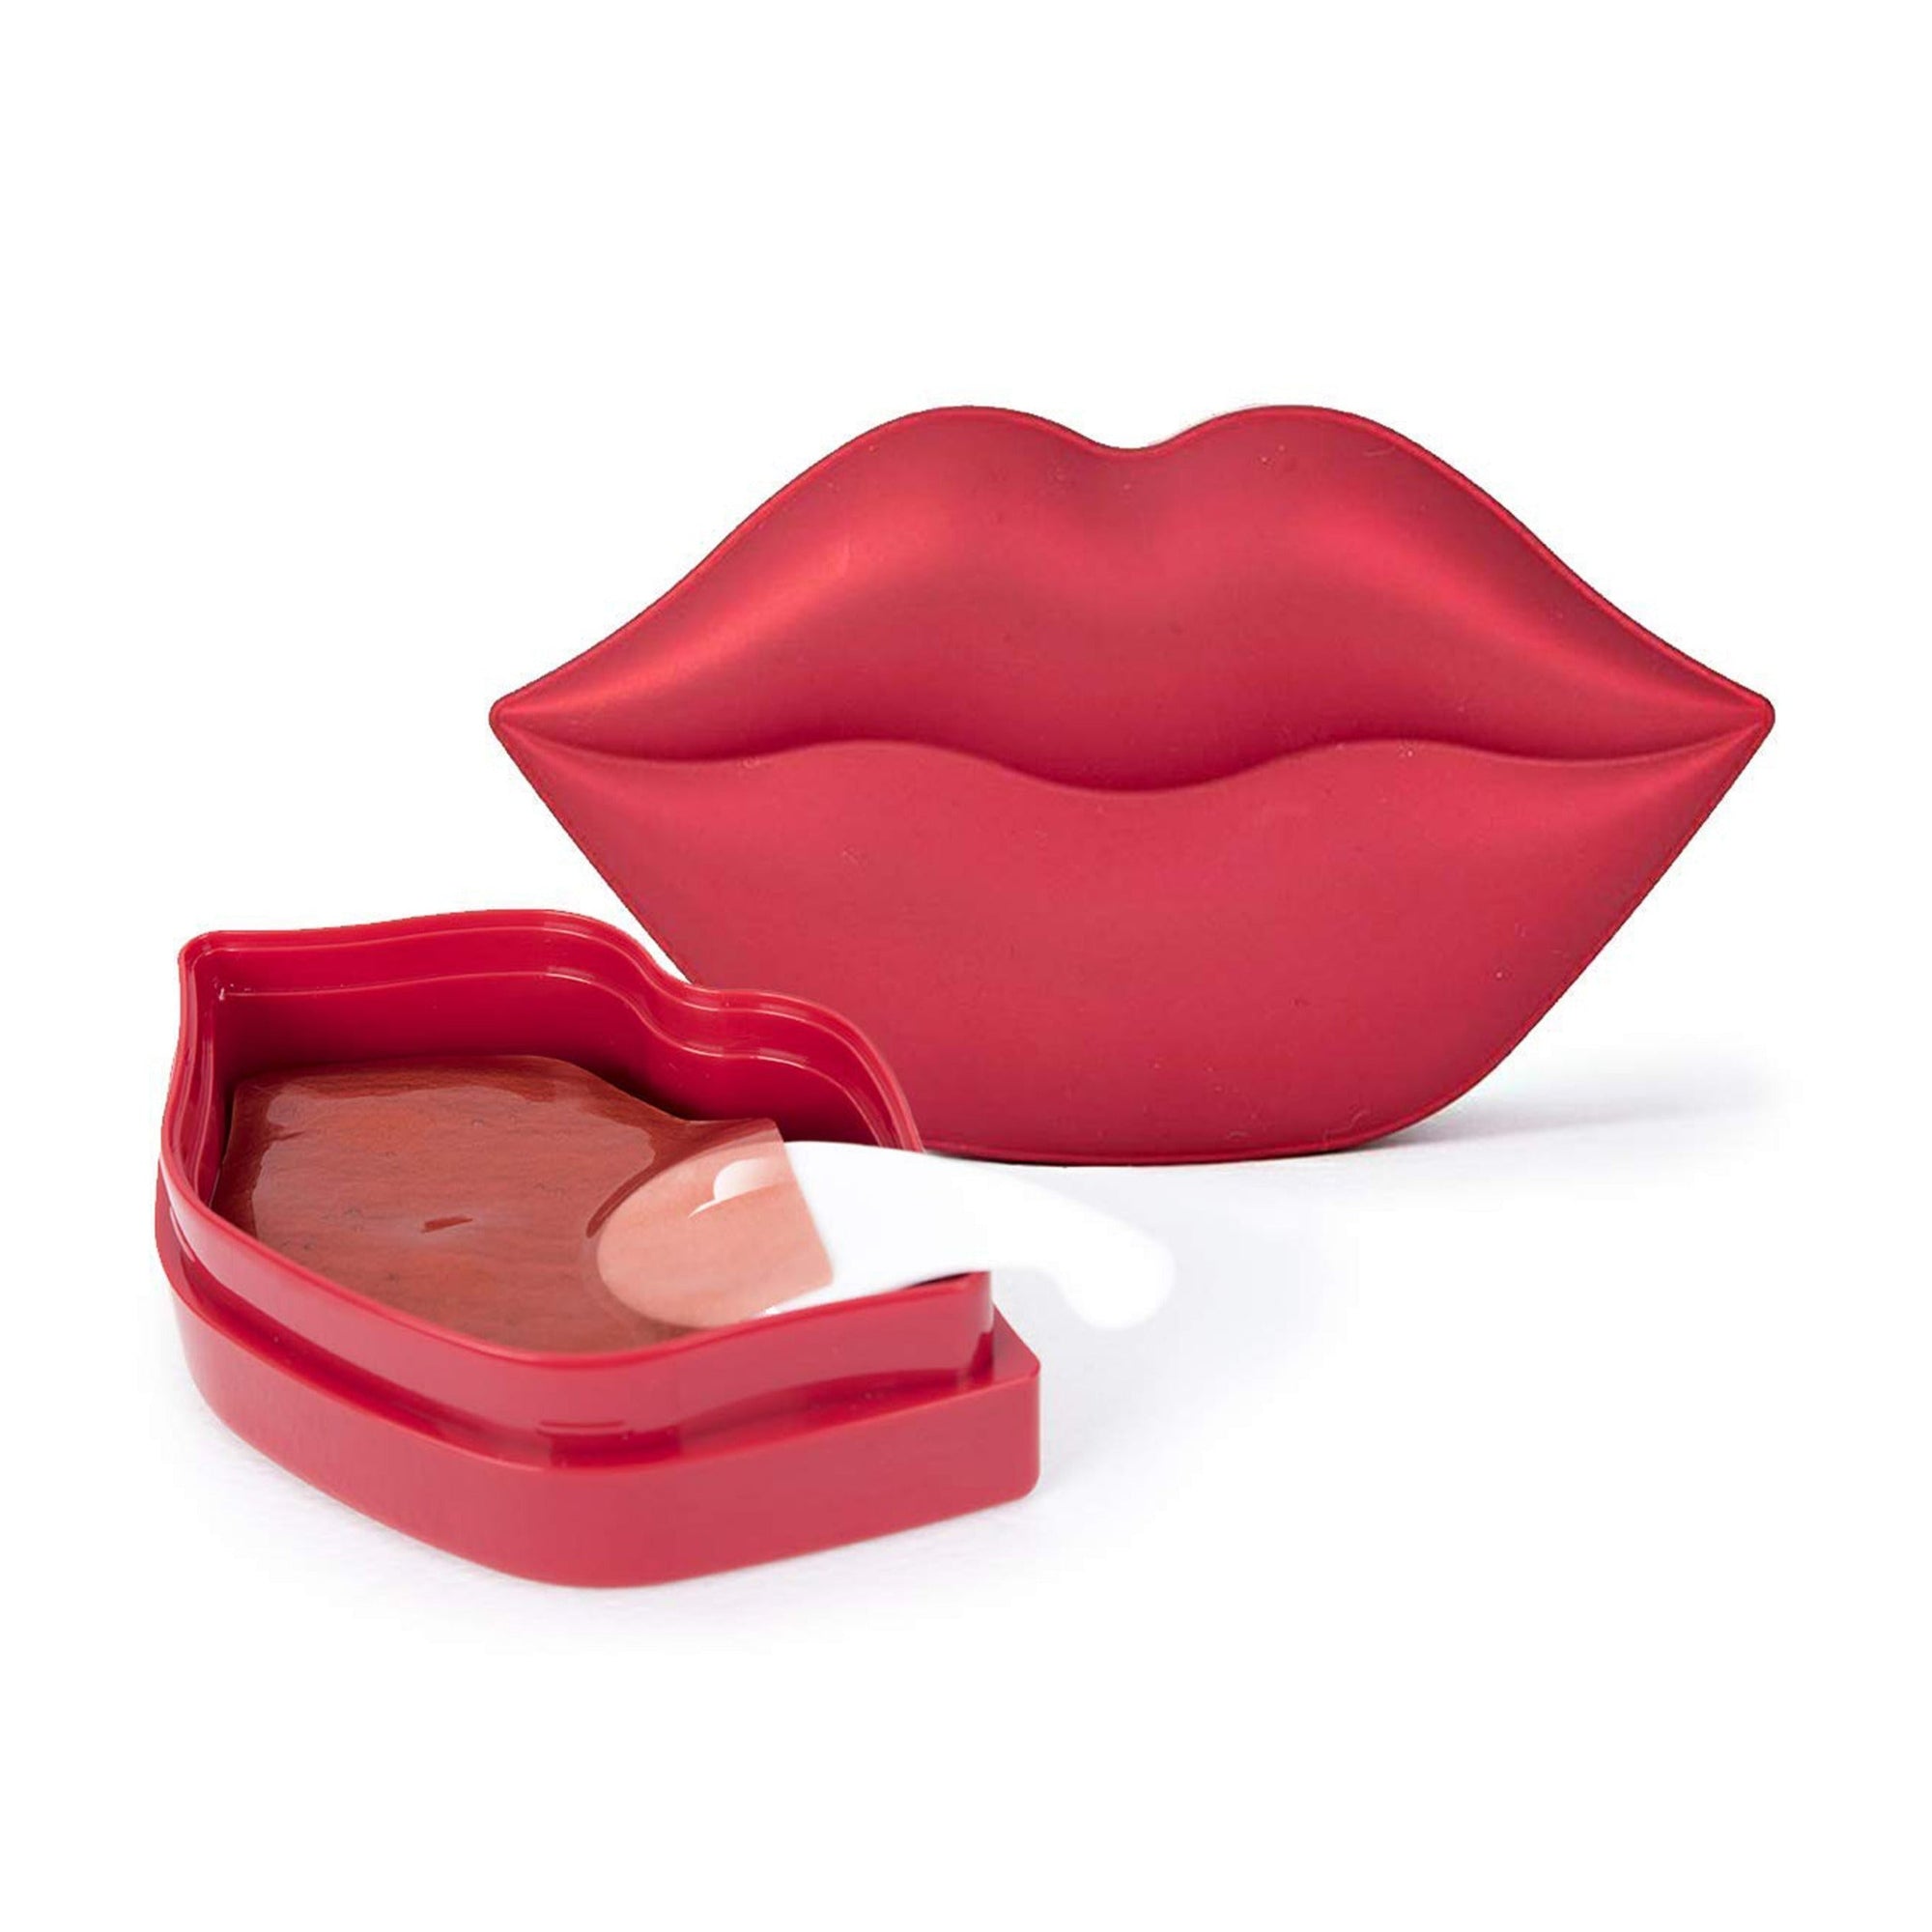 Buy  MUICIN - Moisturizing & Hydrating Lip Sheet Pink Mask - at Best Price Online in Pakistan